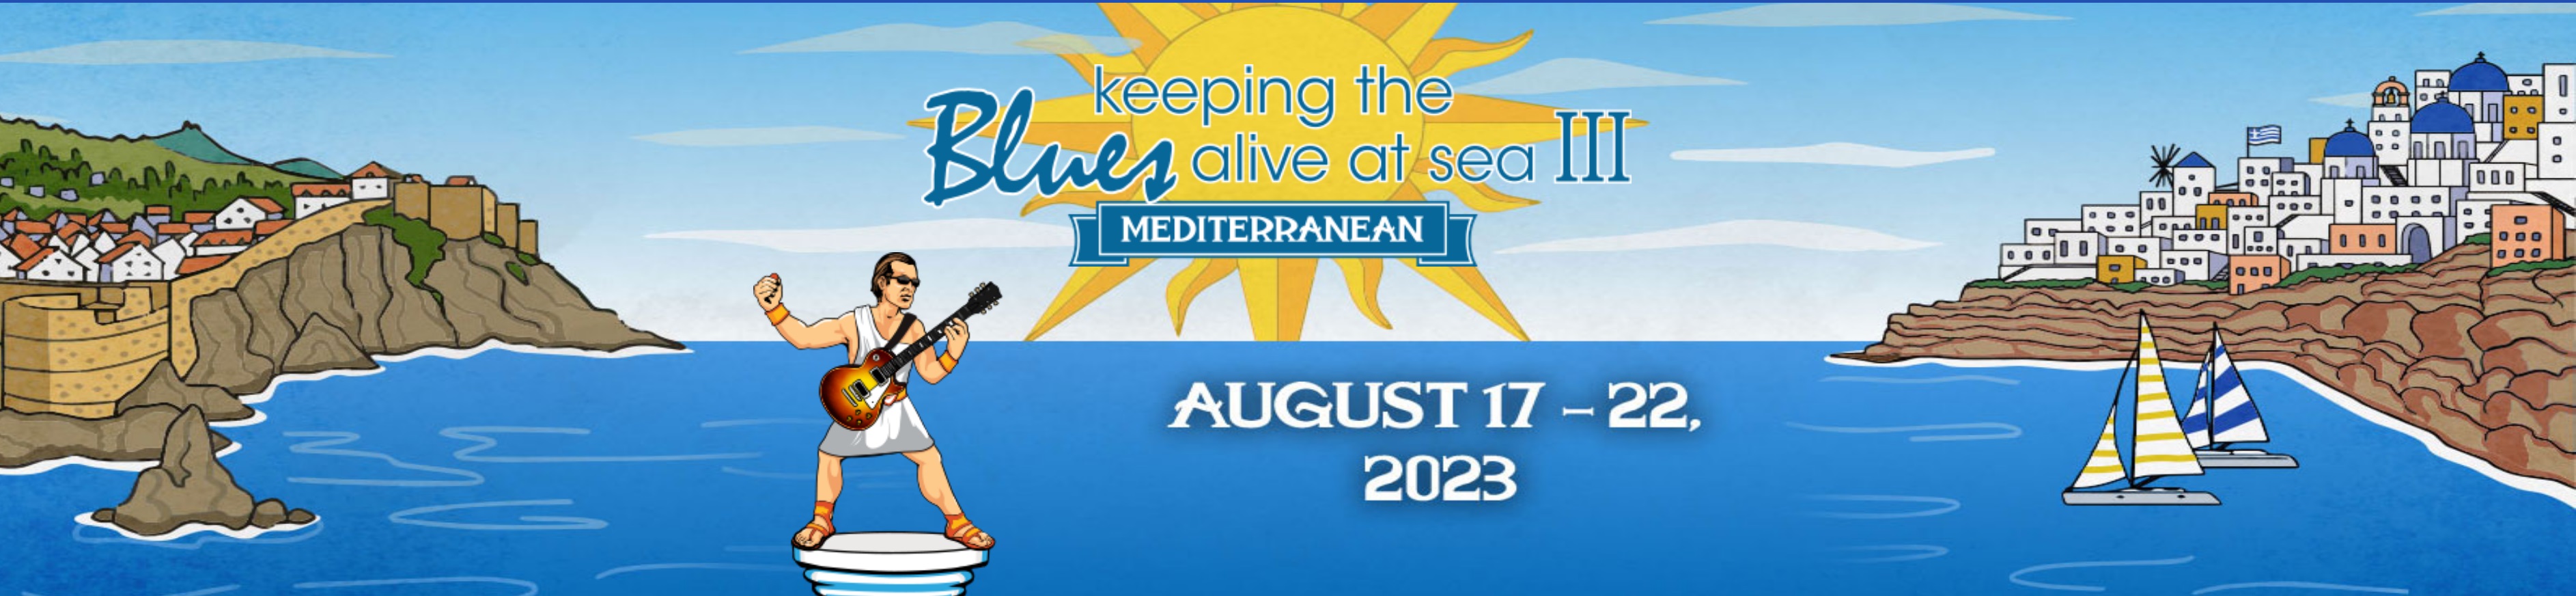 Joe Bonamassa and Sixthman announce Keeping The Blues Alive At Sea Mediterranean III